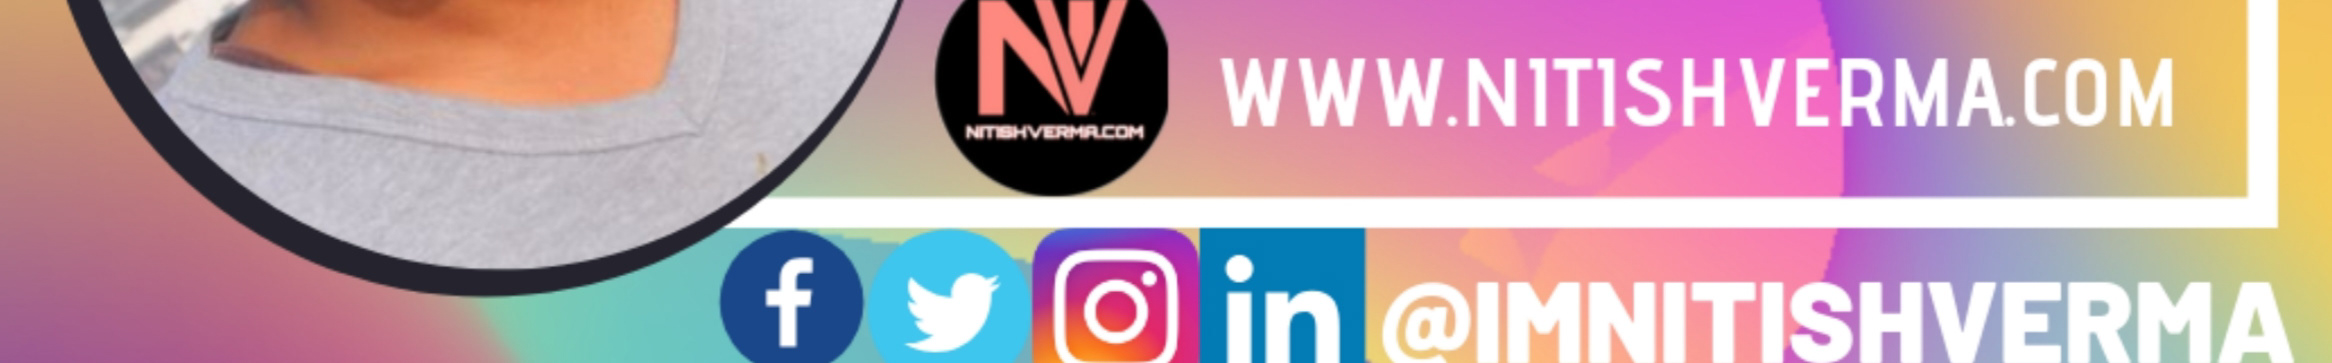 NITISH VERMA's profile banner